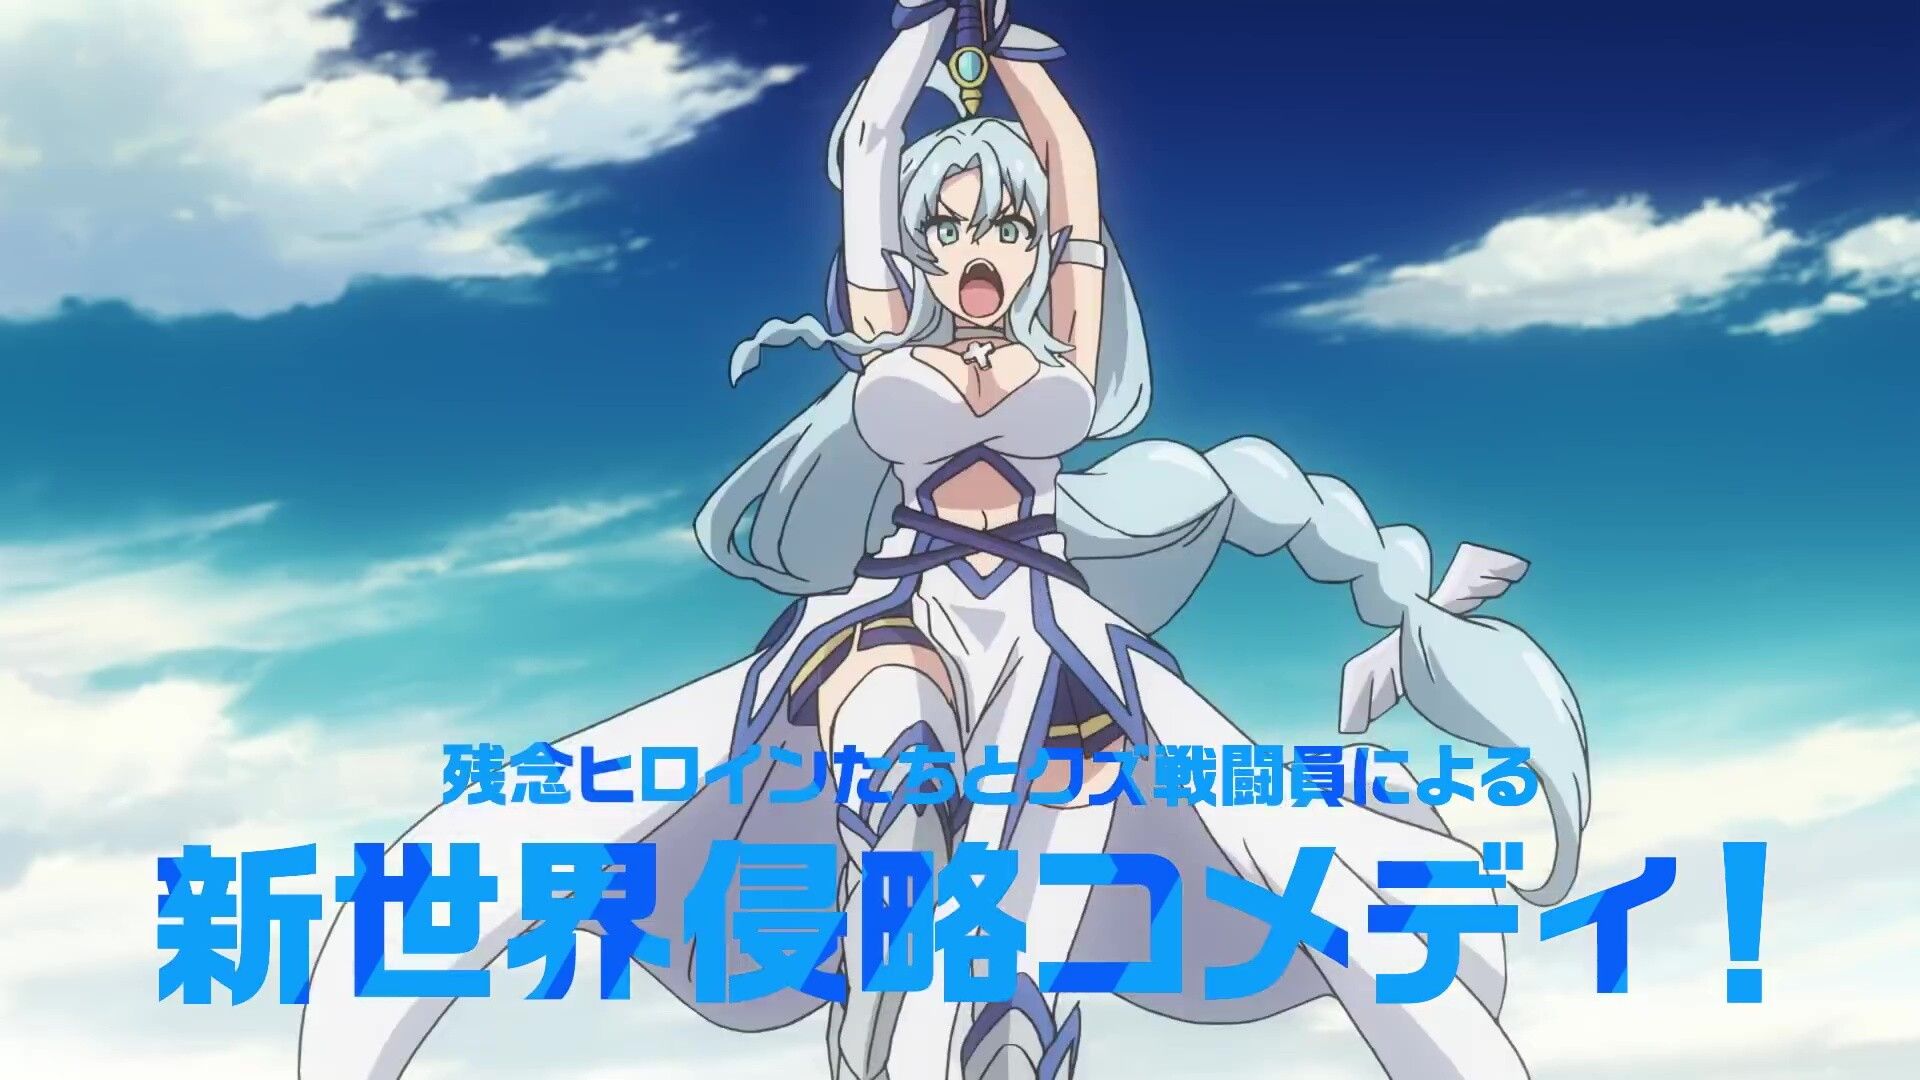 Anime "Combatant, I'm dispatched! Erotic costume girls and neta! April broadcasting starts 29